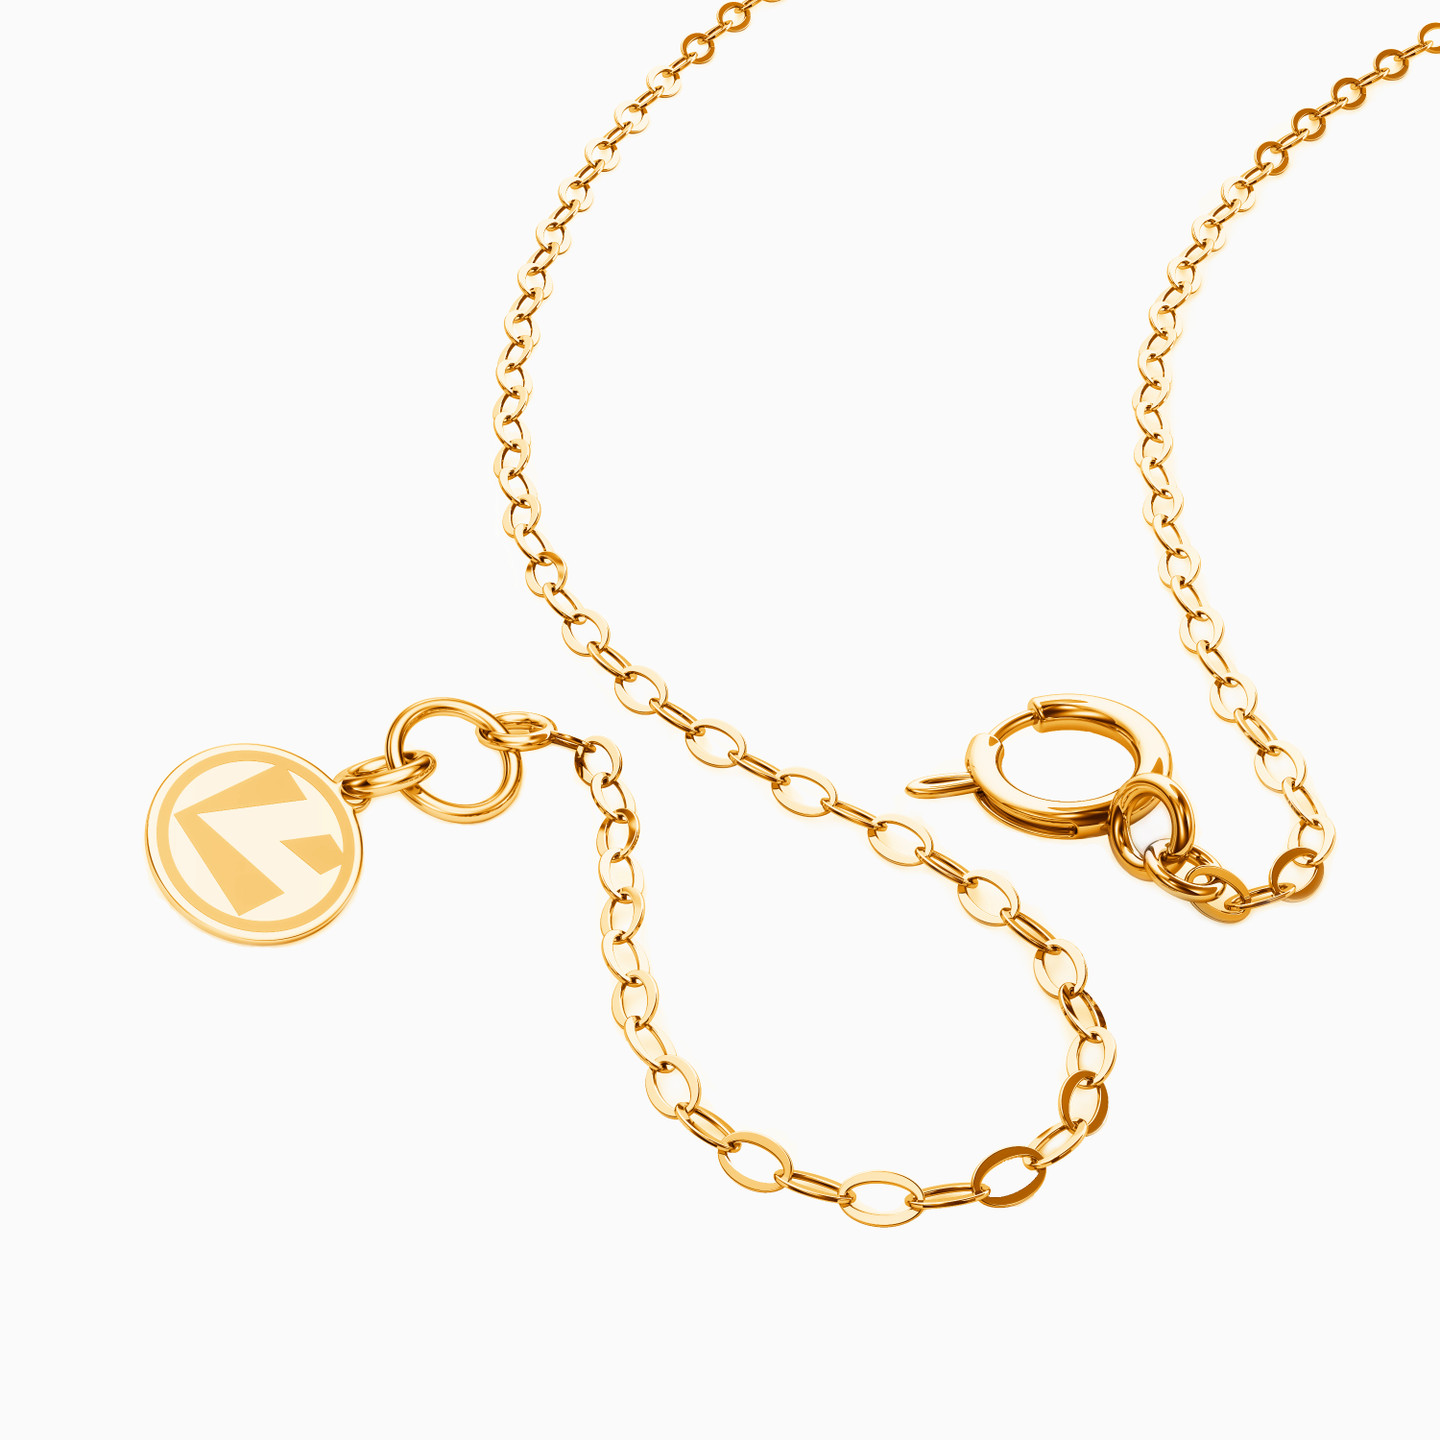 18K Gold Chain Necklace | L'azurde Egypt